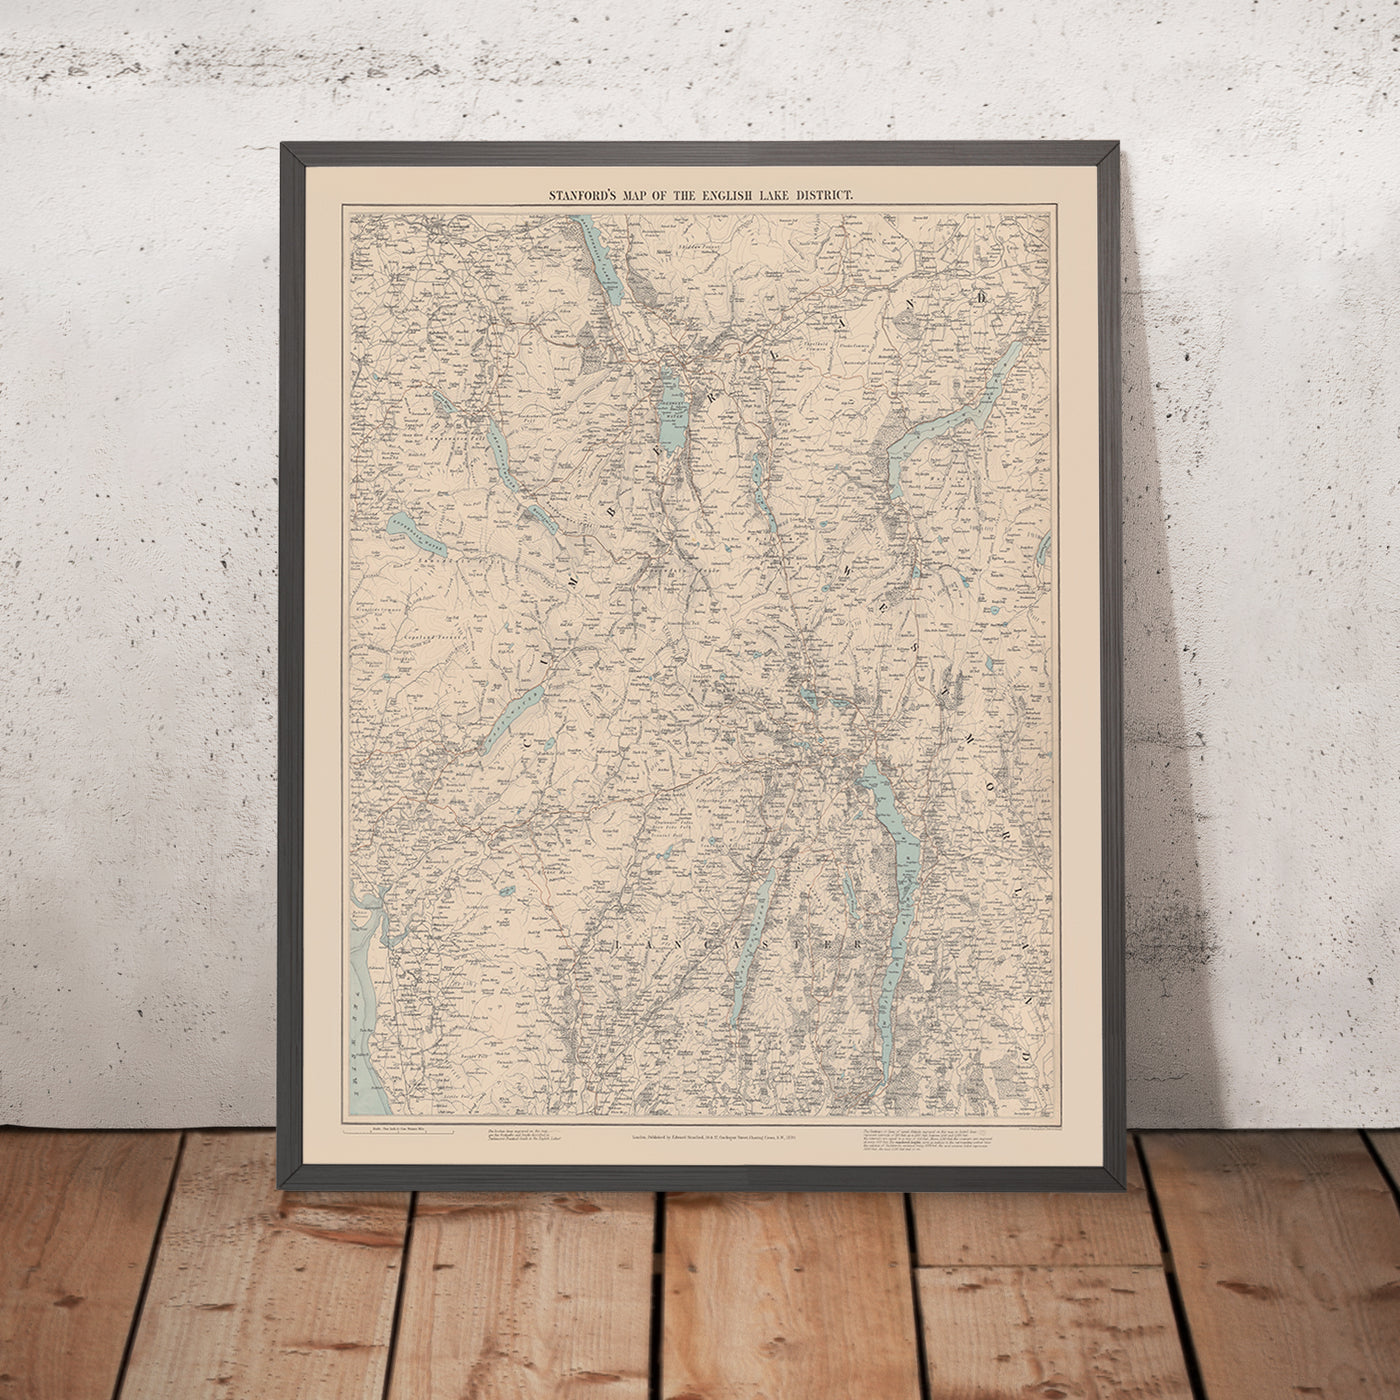 Alte Karte des Lake District von Stanford, 1899: Windermere, Scafell Pike, Kendal, Ullswater, Helvellyn